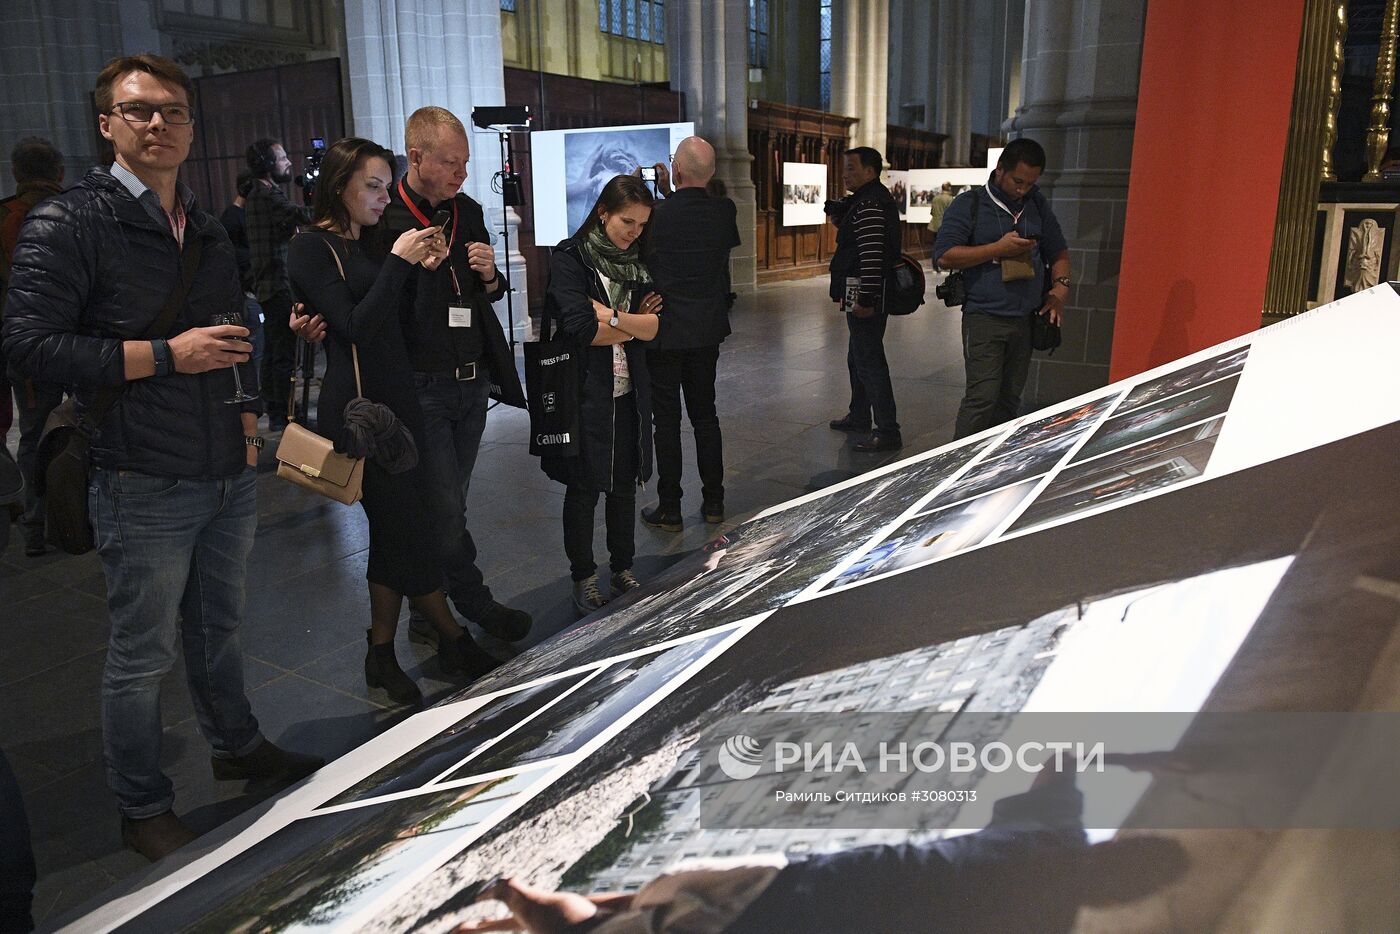 Выставка победителей World Press Photo в Амстердаме